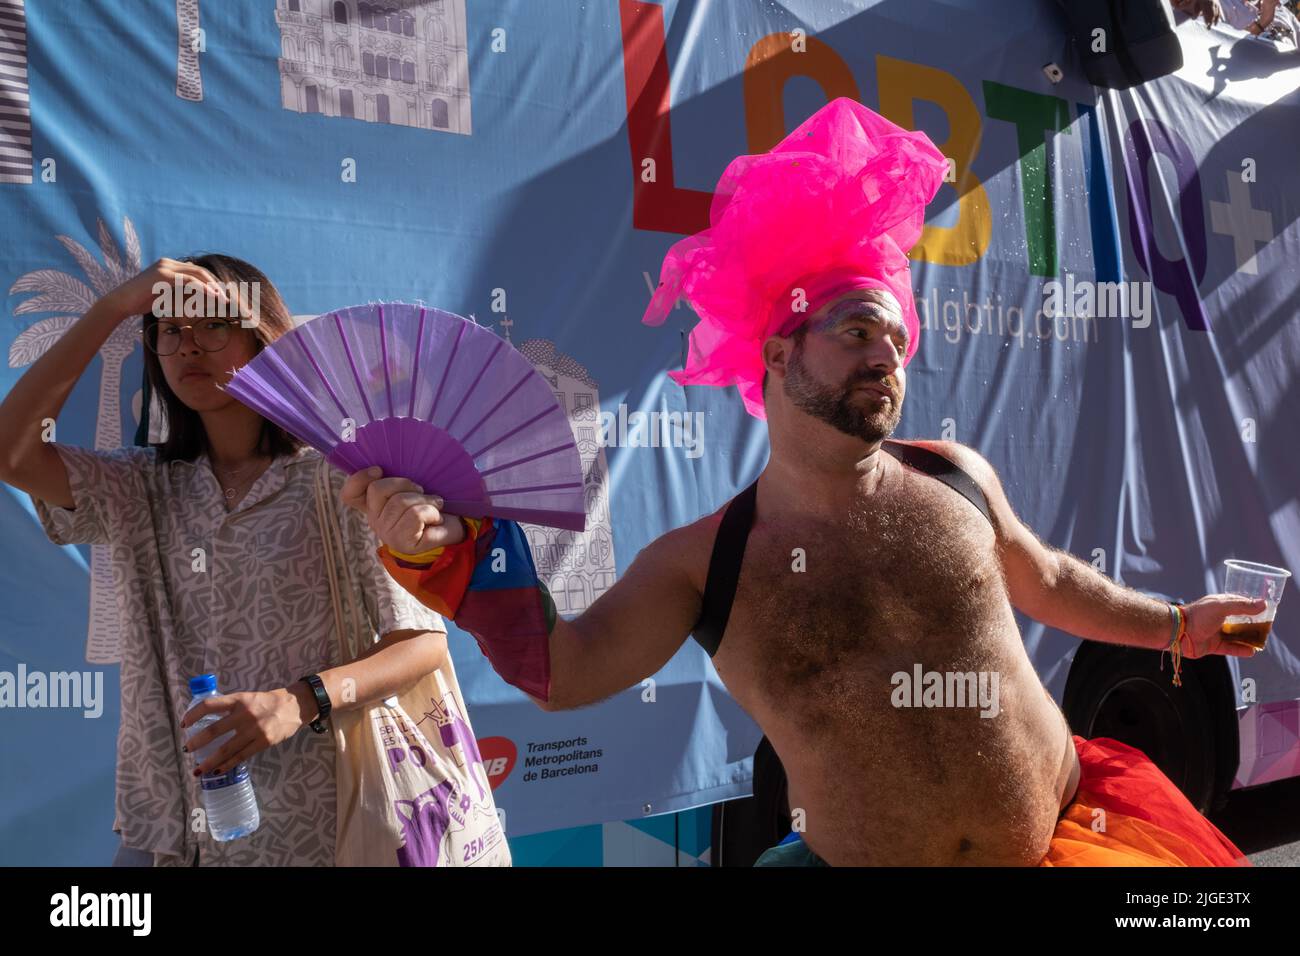 Barcelona, Spain - June 25, 2022: Pride 2022 celebration. A reveler with a bizarre headdress and fan posing among tourists along Paral-lel Avenue. Stock Photo